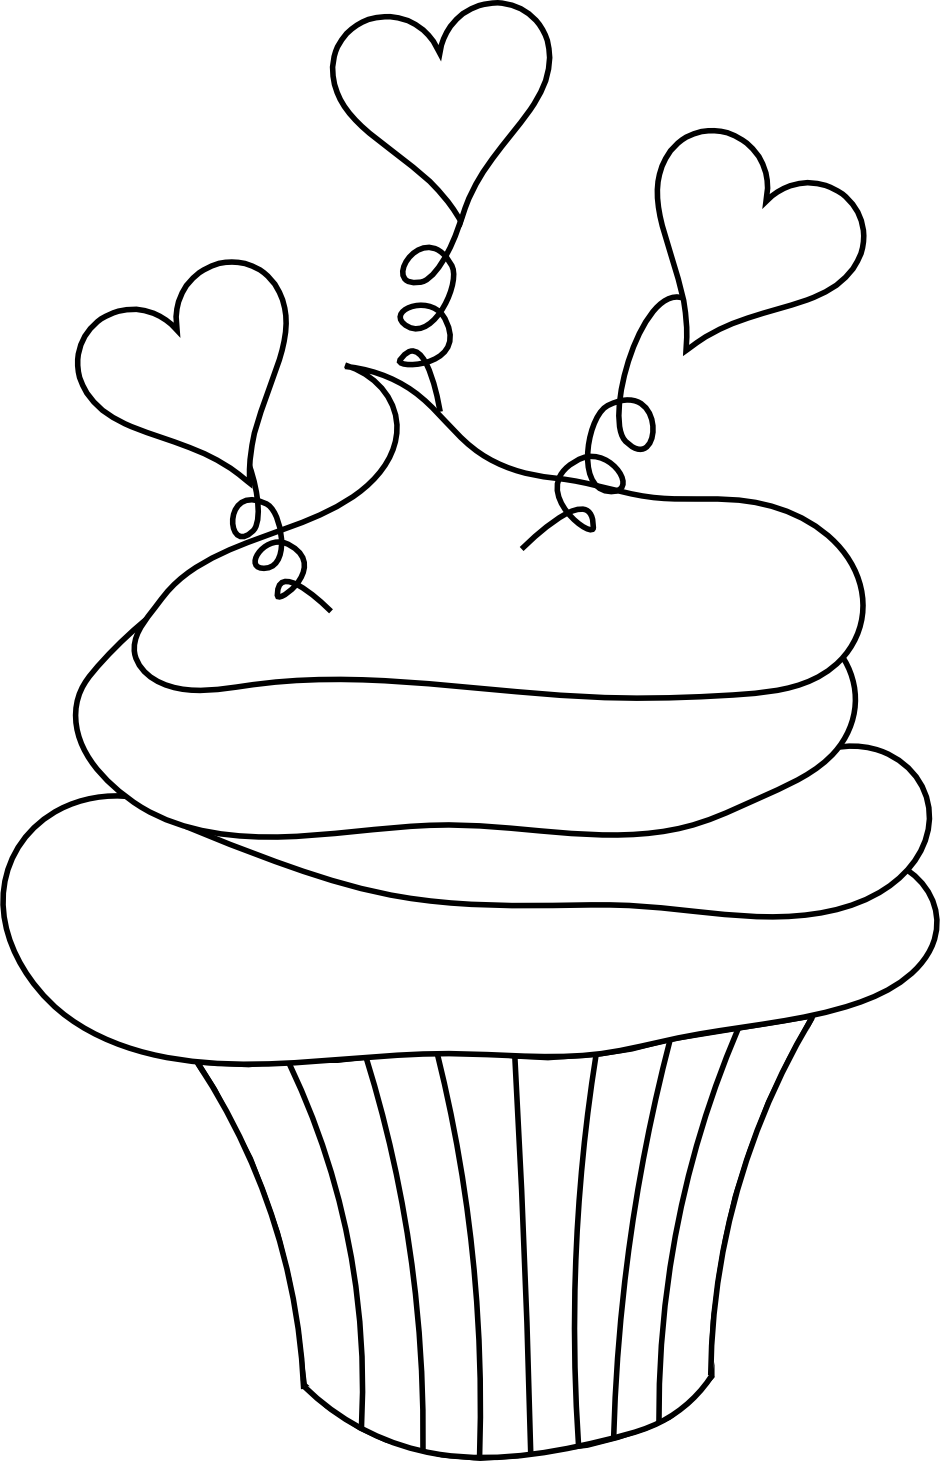 Heart Cupcake Free Images At Vector Clip Art